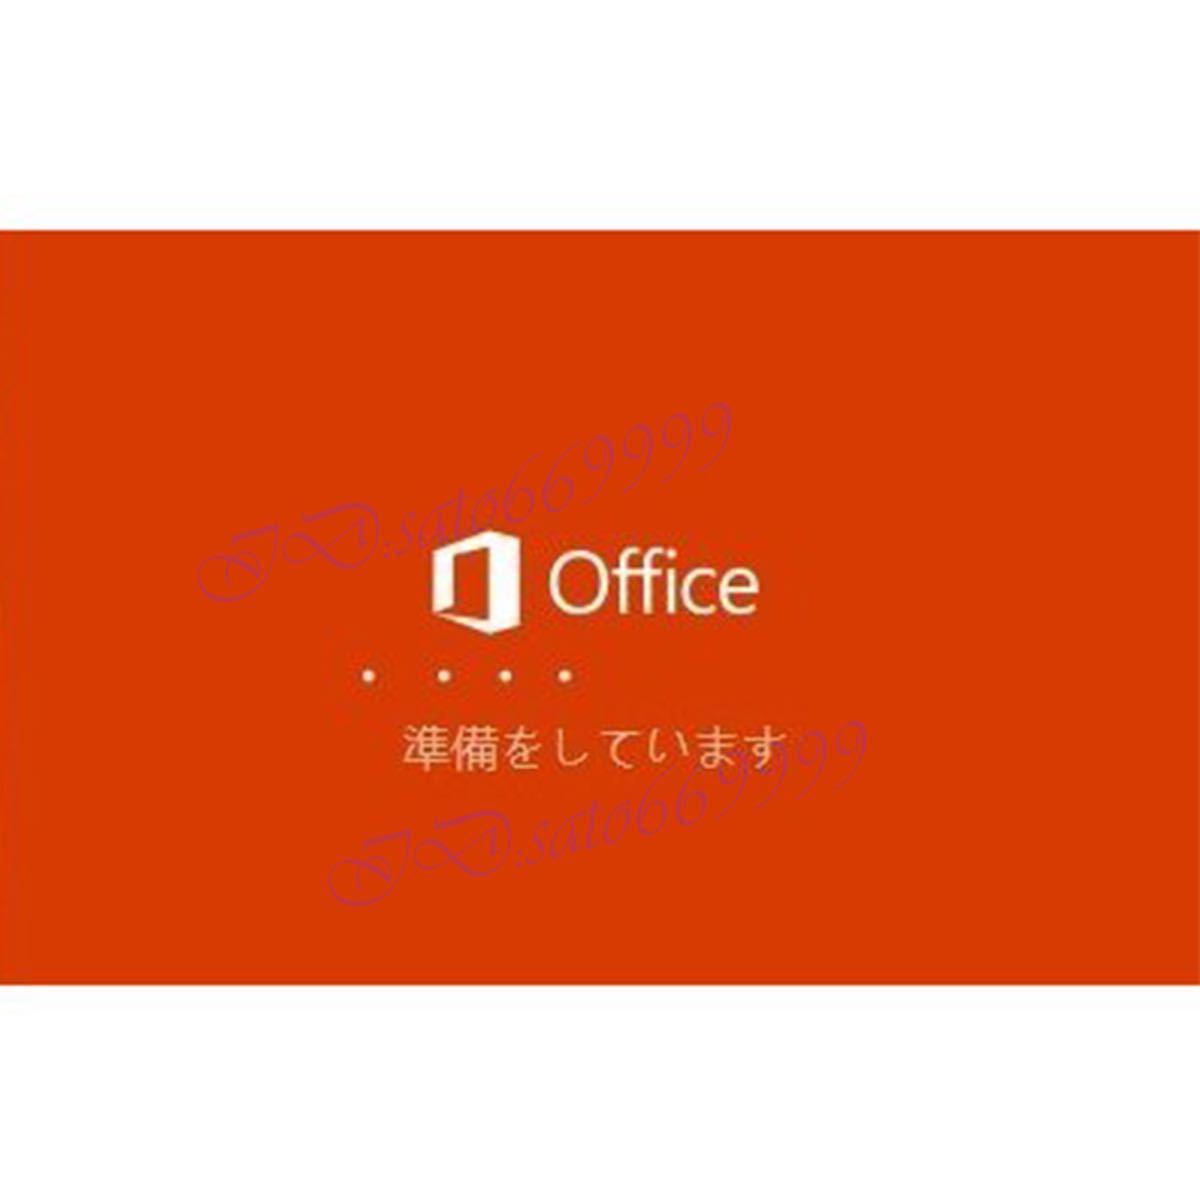 【Office2021 ダウンロード版 】Microsoft Office 2021 Professional Plus プロダクトキー オフィス2021 認証保証 手順書付き土